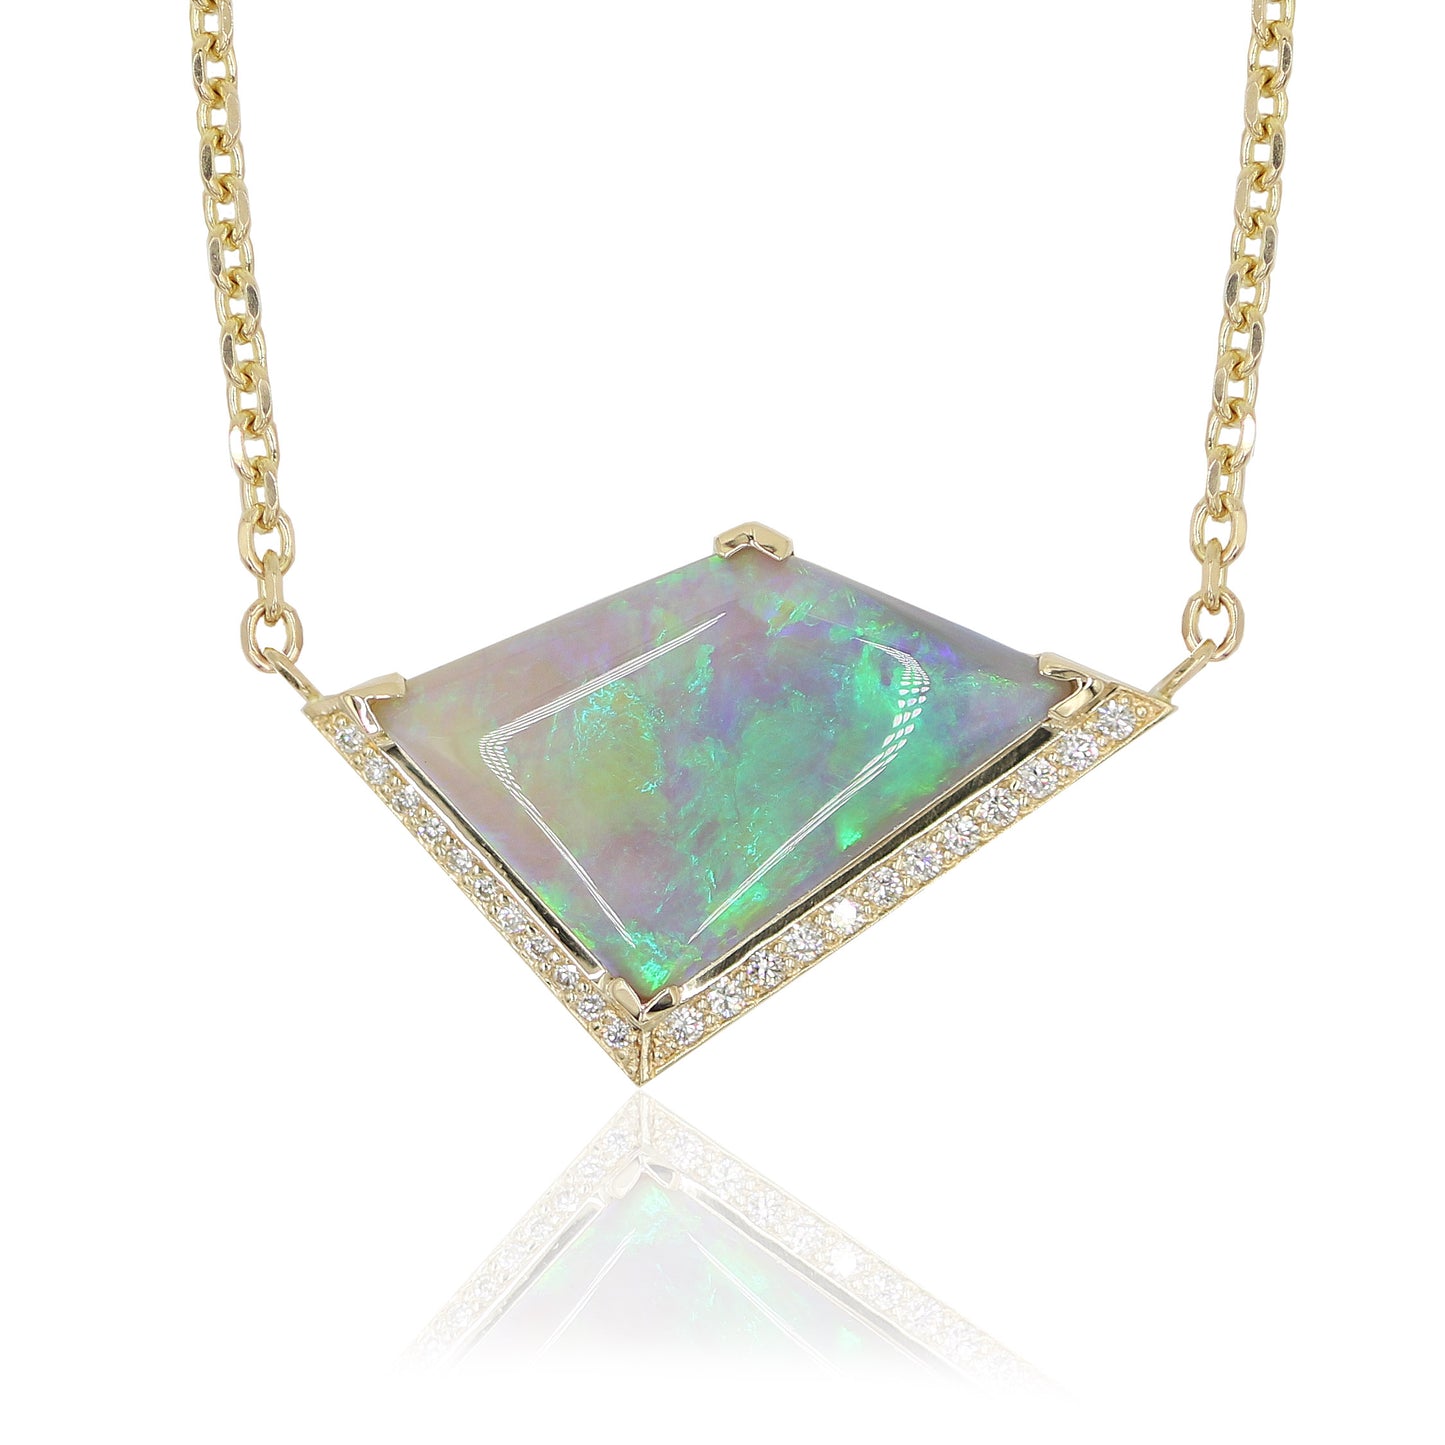 Big Opal Necklace